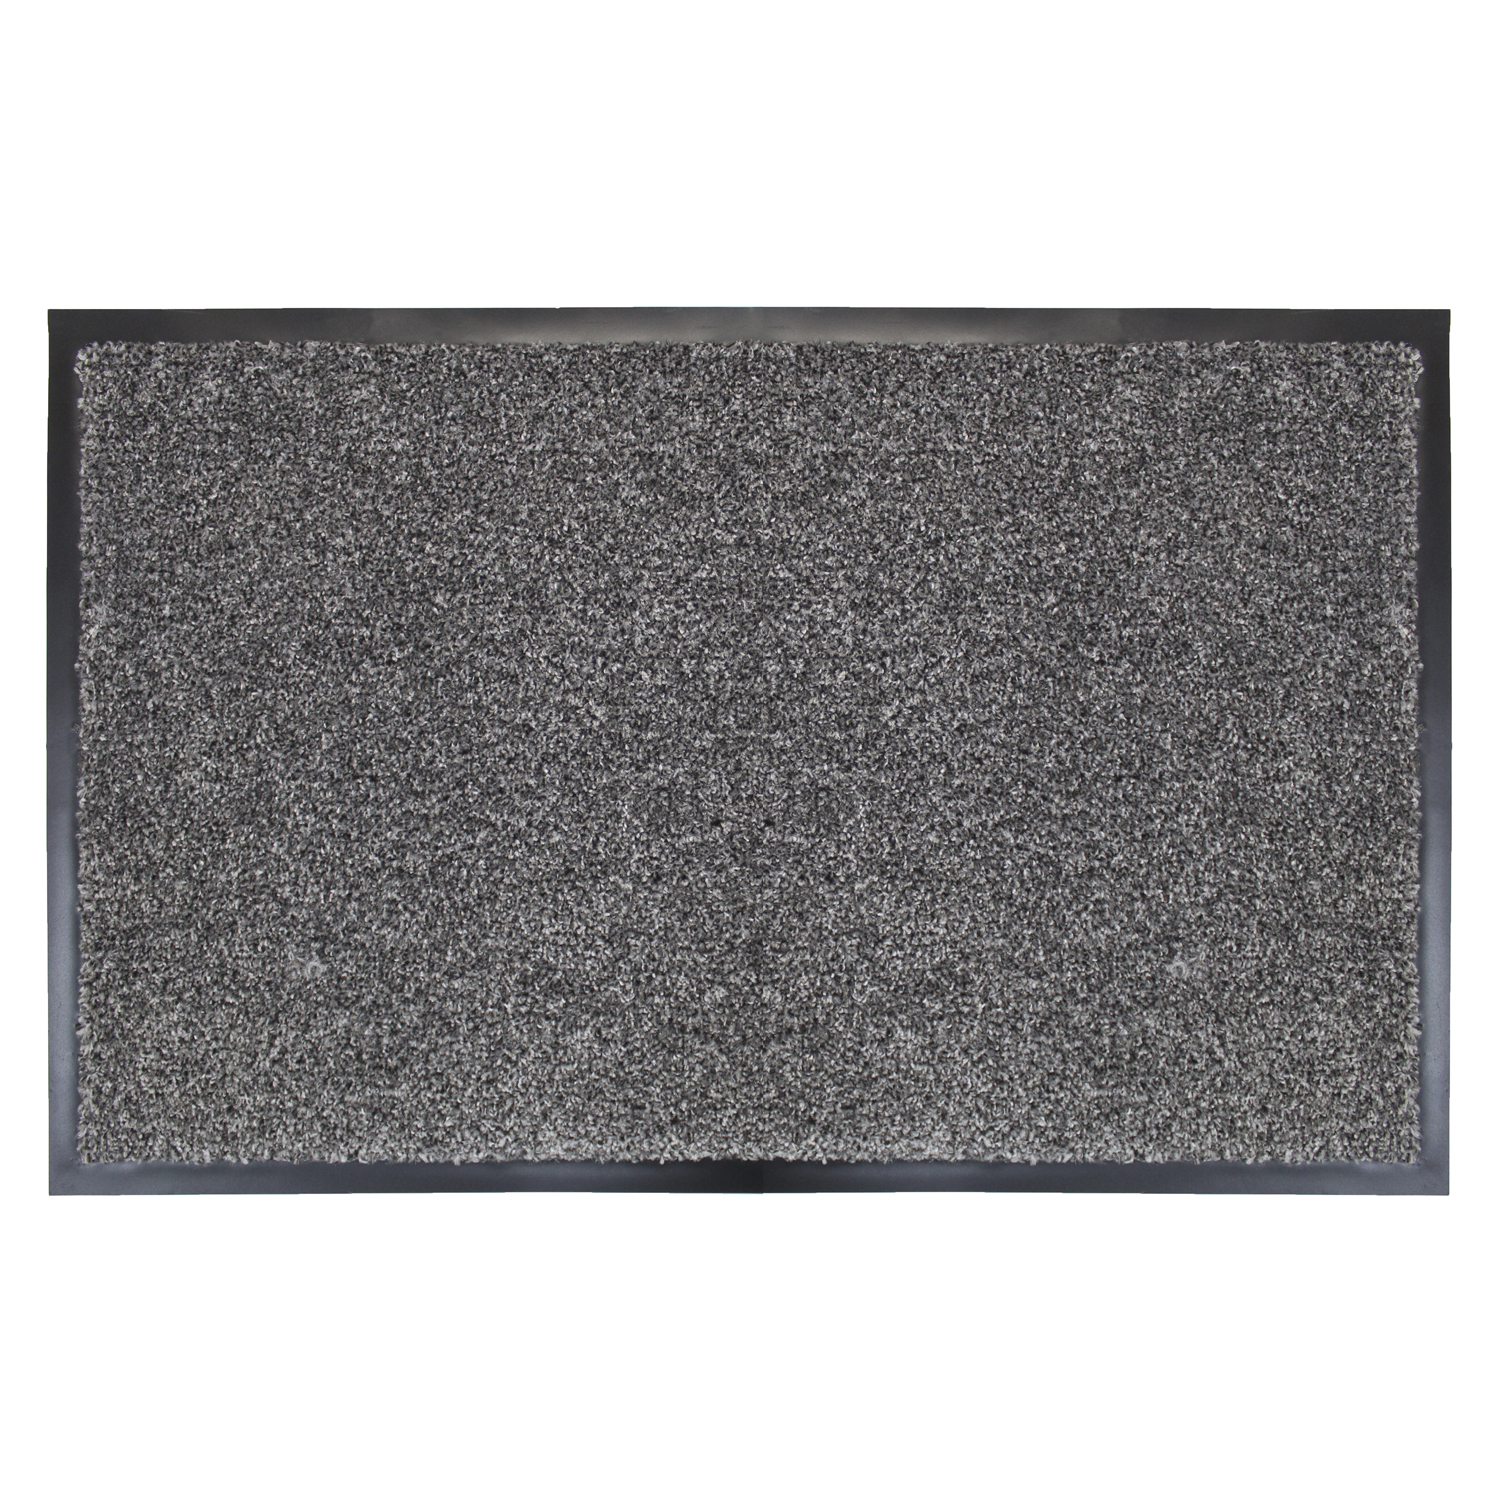 Single Primeur Mud Master Doormat 90 x 60cm in Assorted styles Image 4